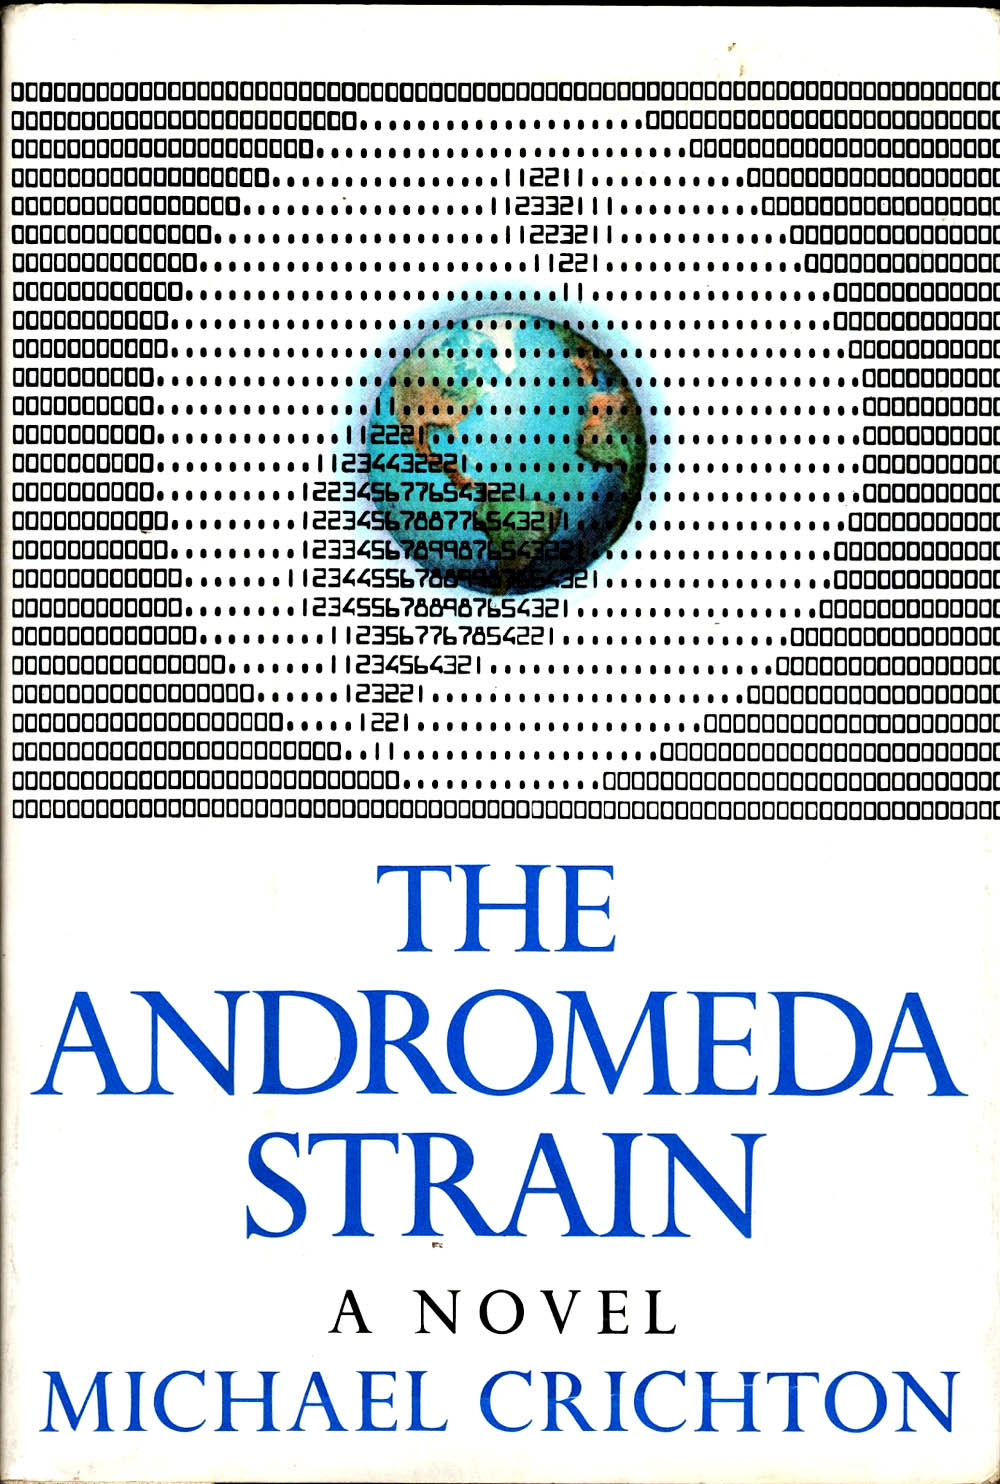 The Andromeda Strain 1969